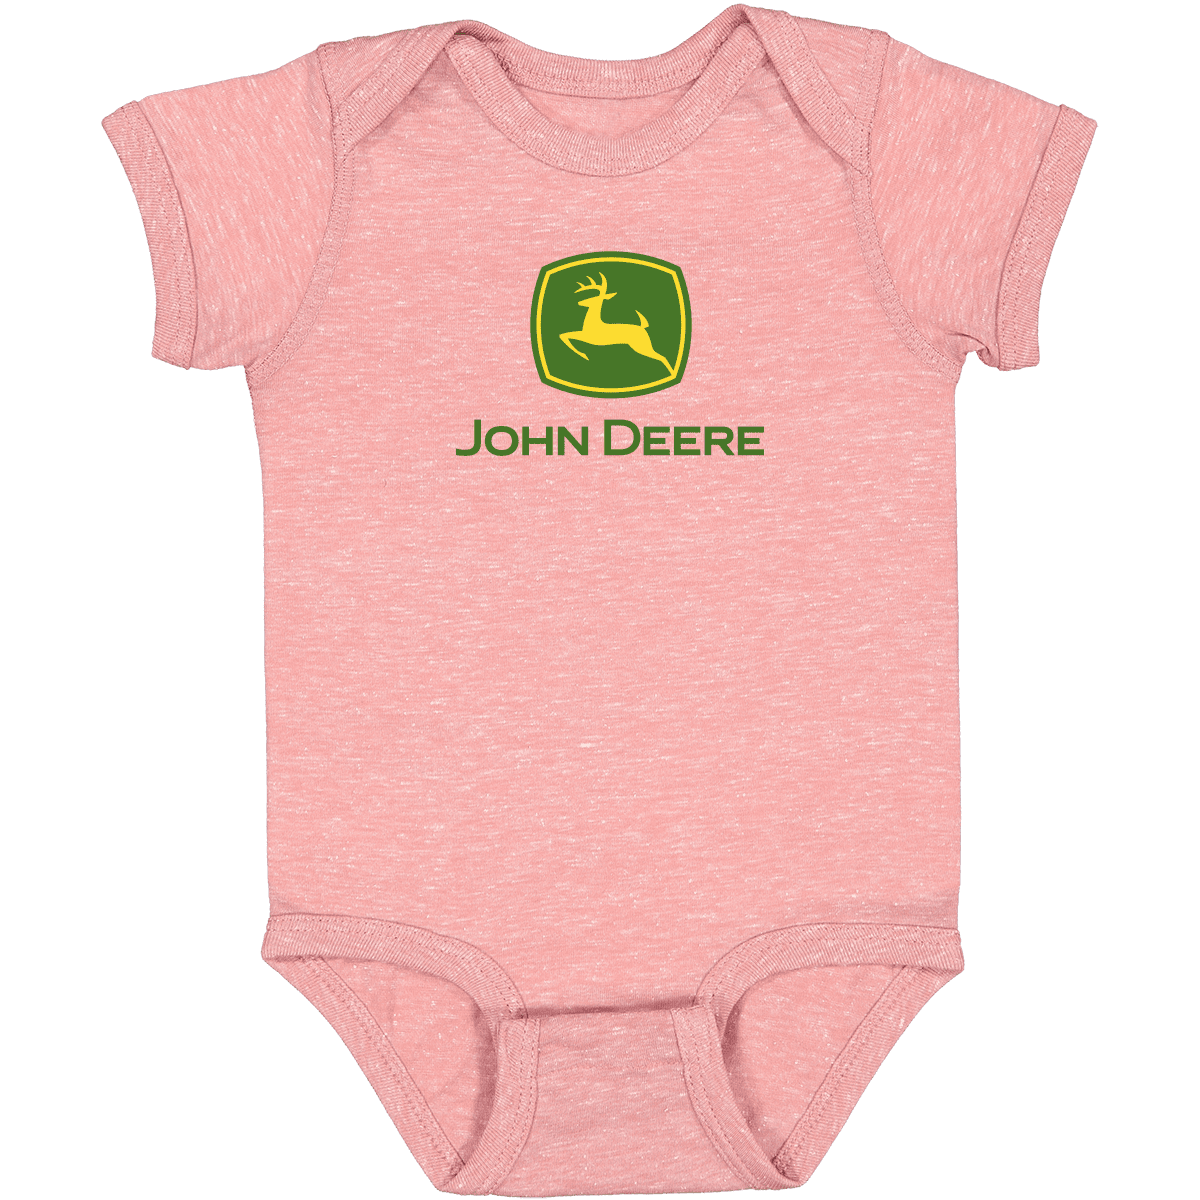 John Deere Clothing